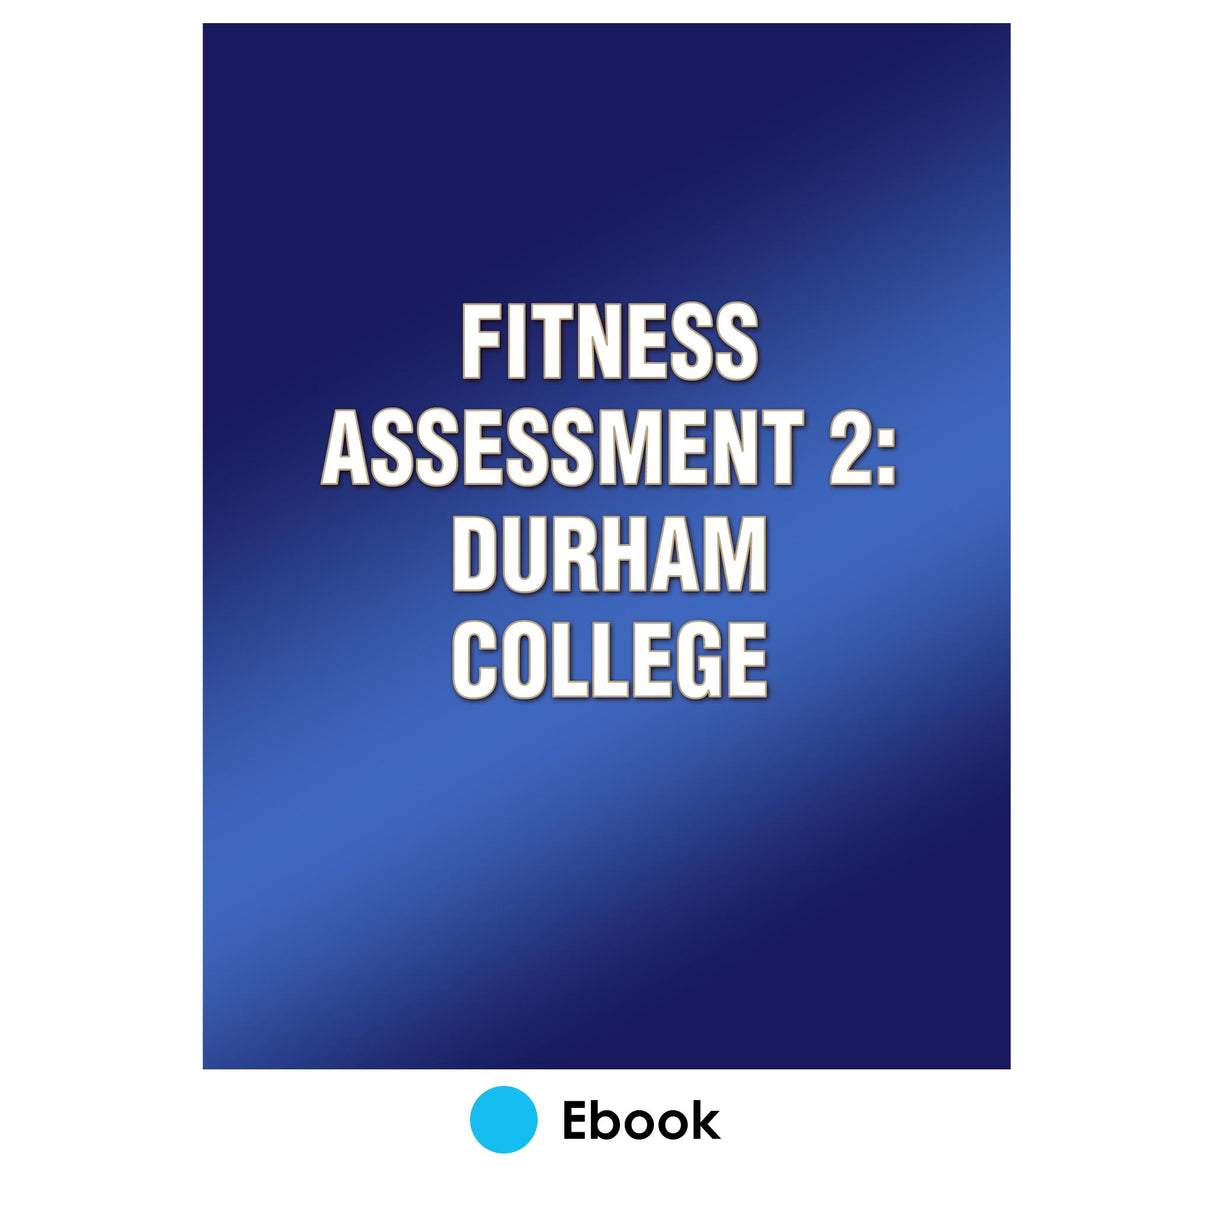 Fitness Assessment 2: Durham College